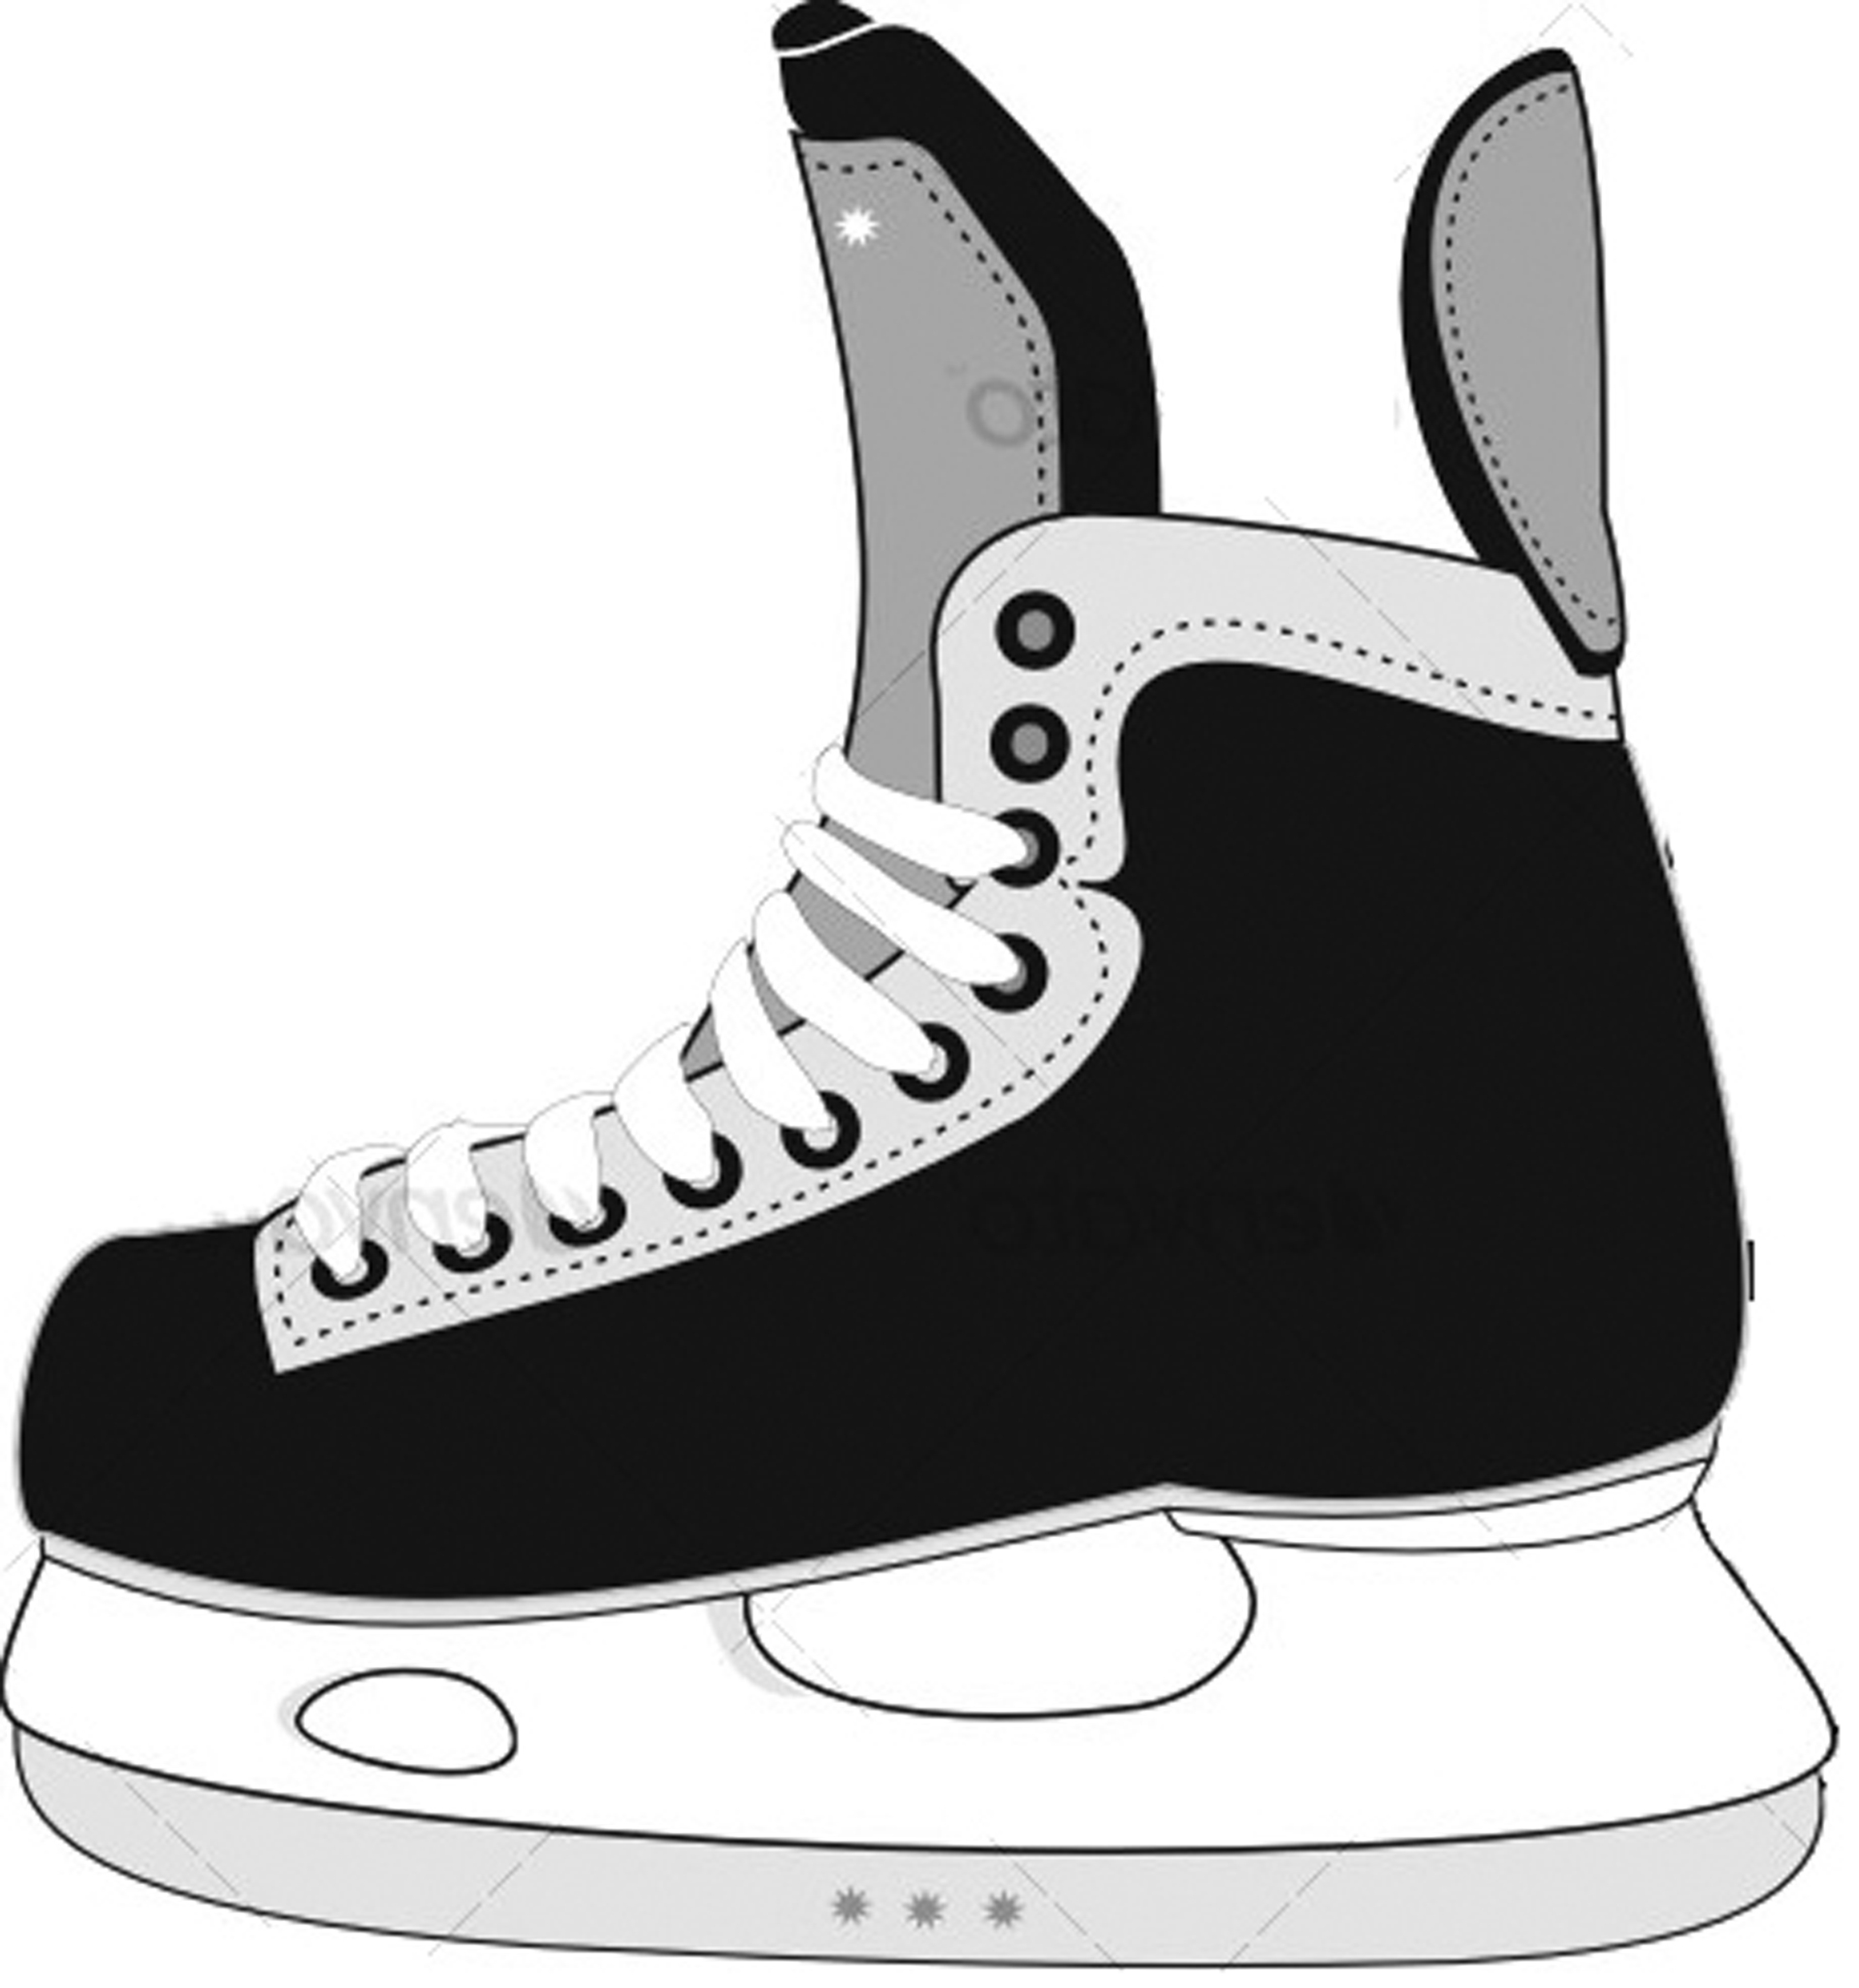 Displaying 20 Images For Cartoon Hockey Skates